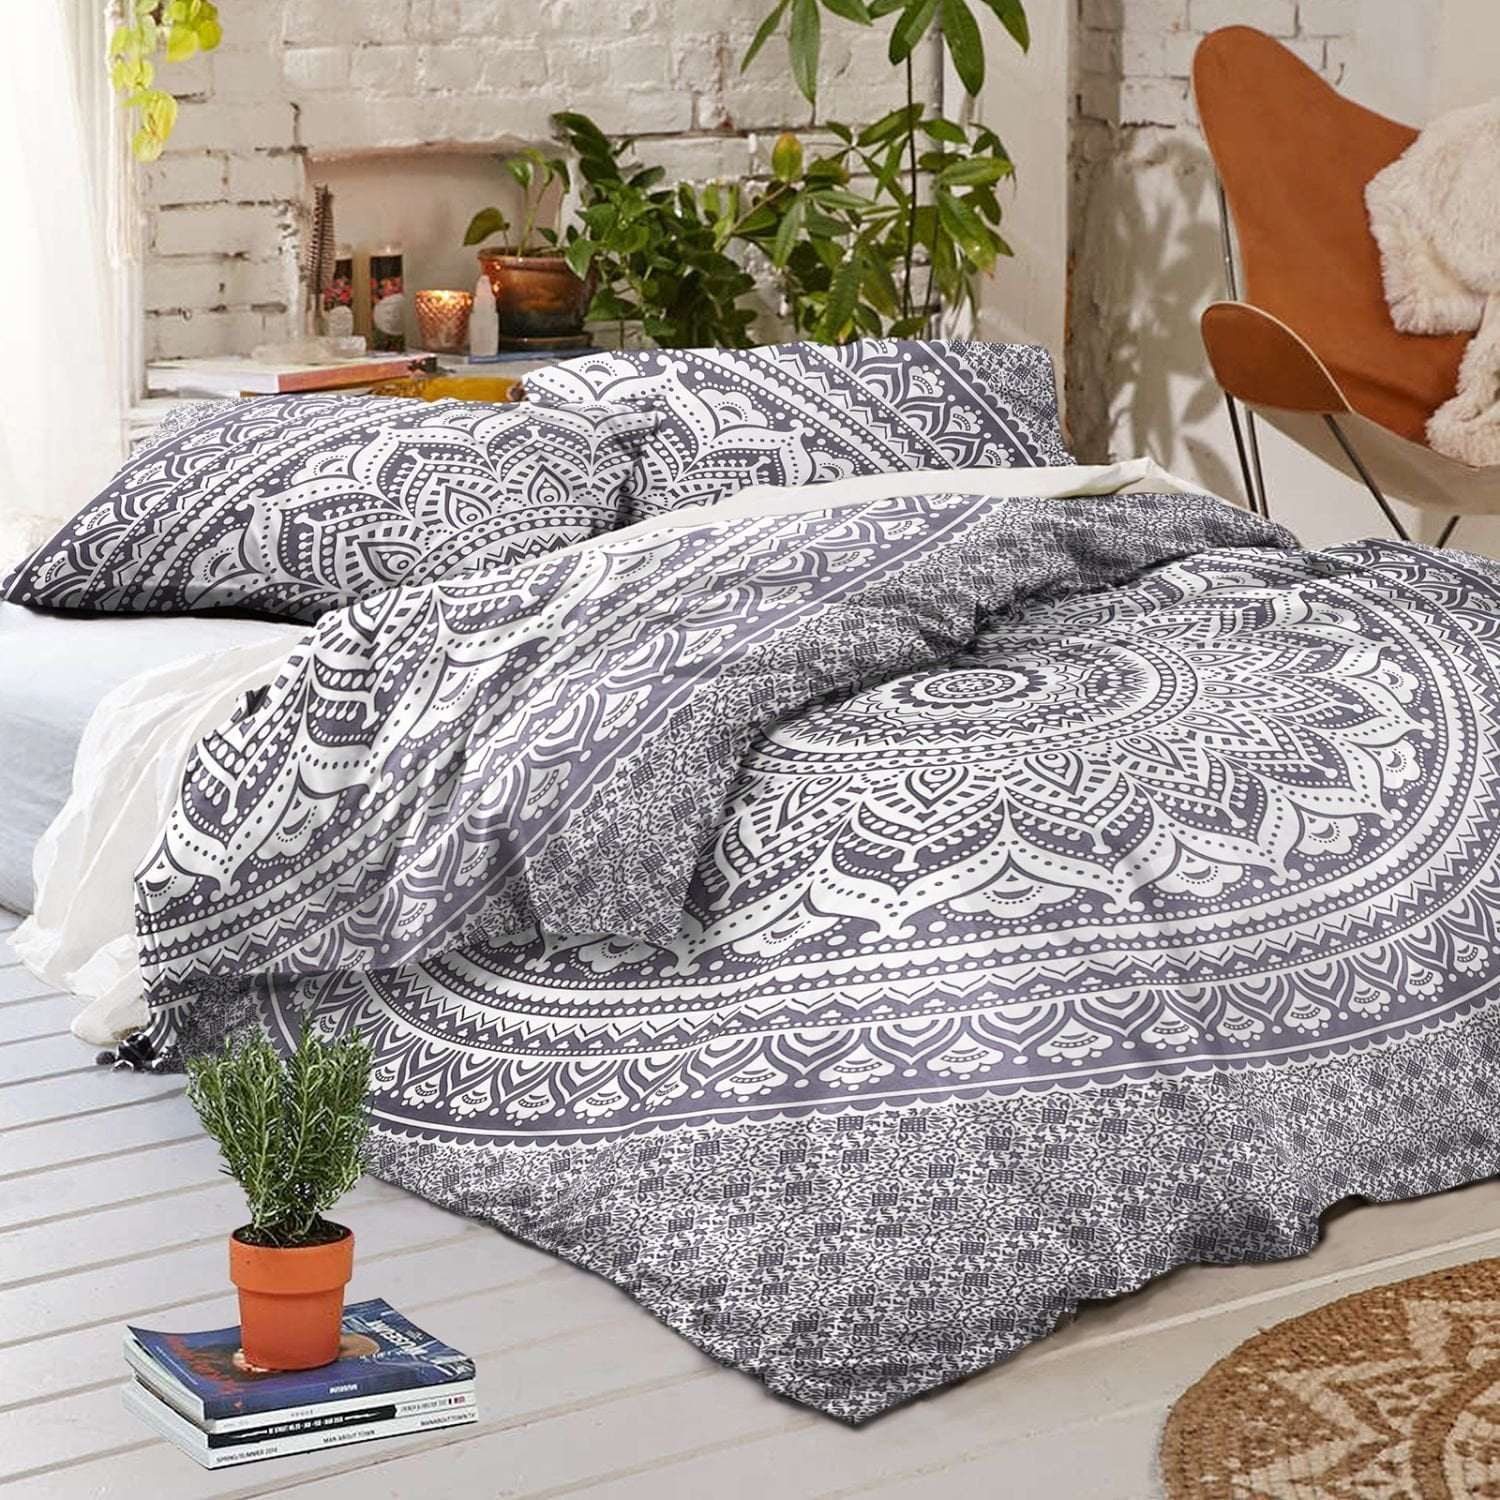 Queen Bohemian Mandala Bed Cover Throw Bedding Coverlet Indian Bedding Bedspread 